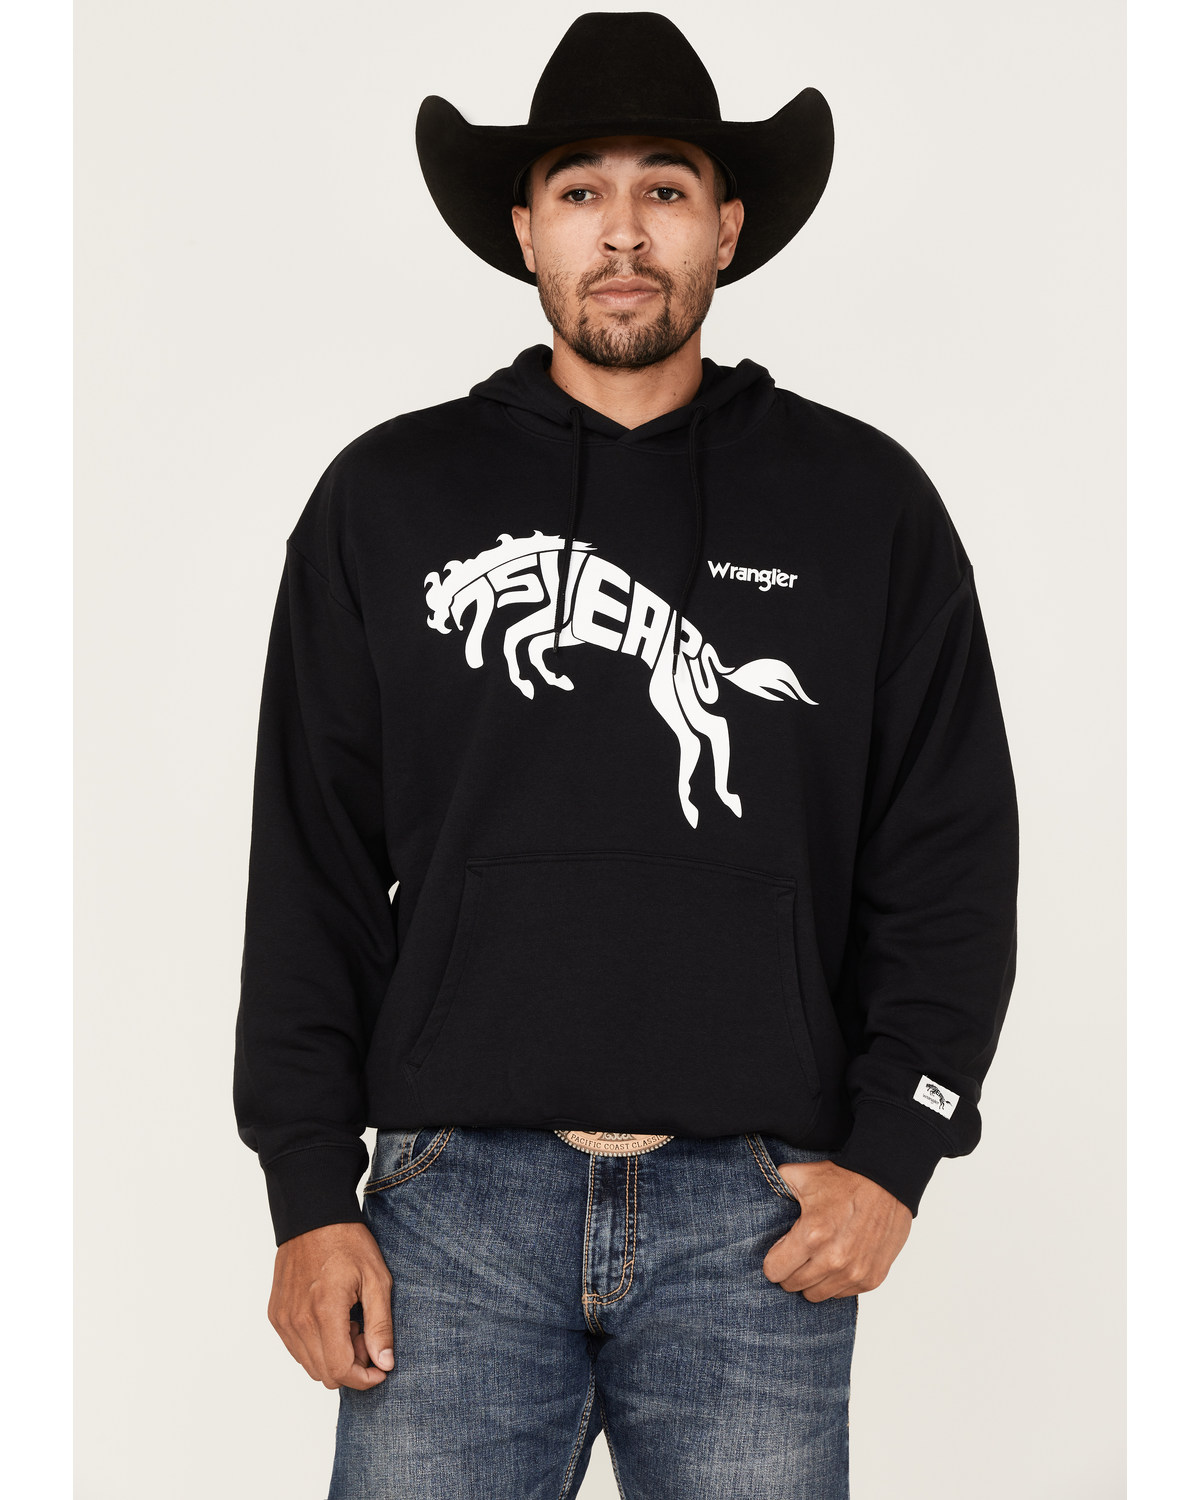 Wrangler Men's 75 Years Black Horse Graphic Hooded Sweatshirt